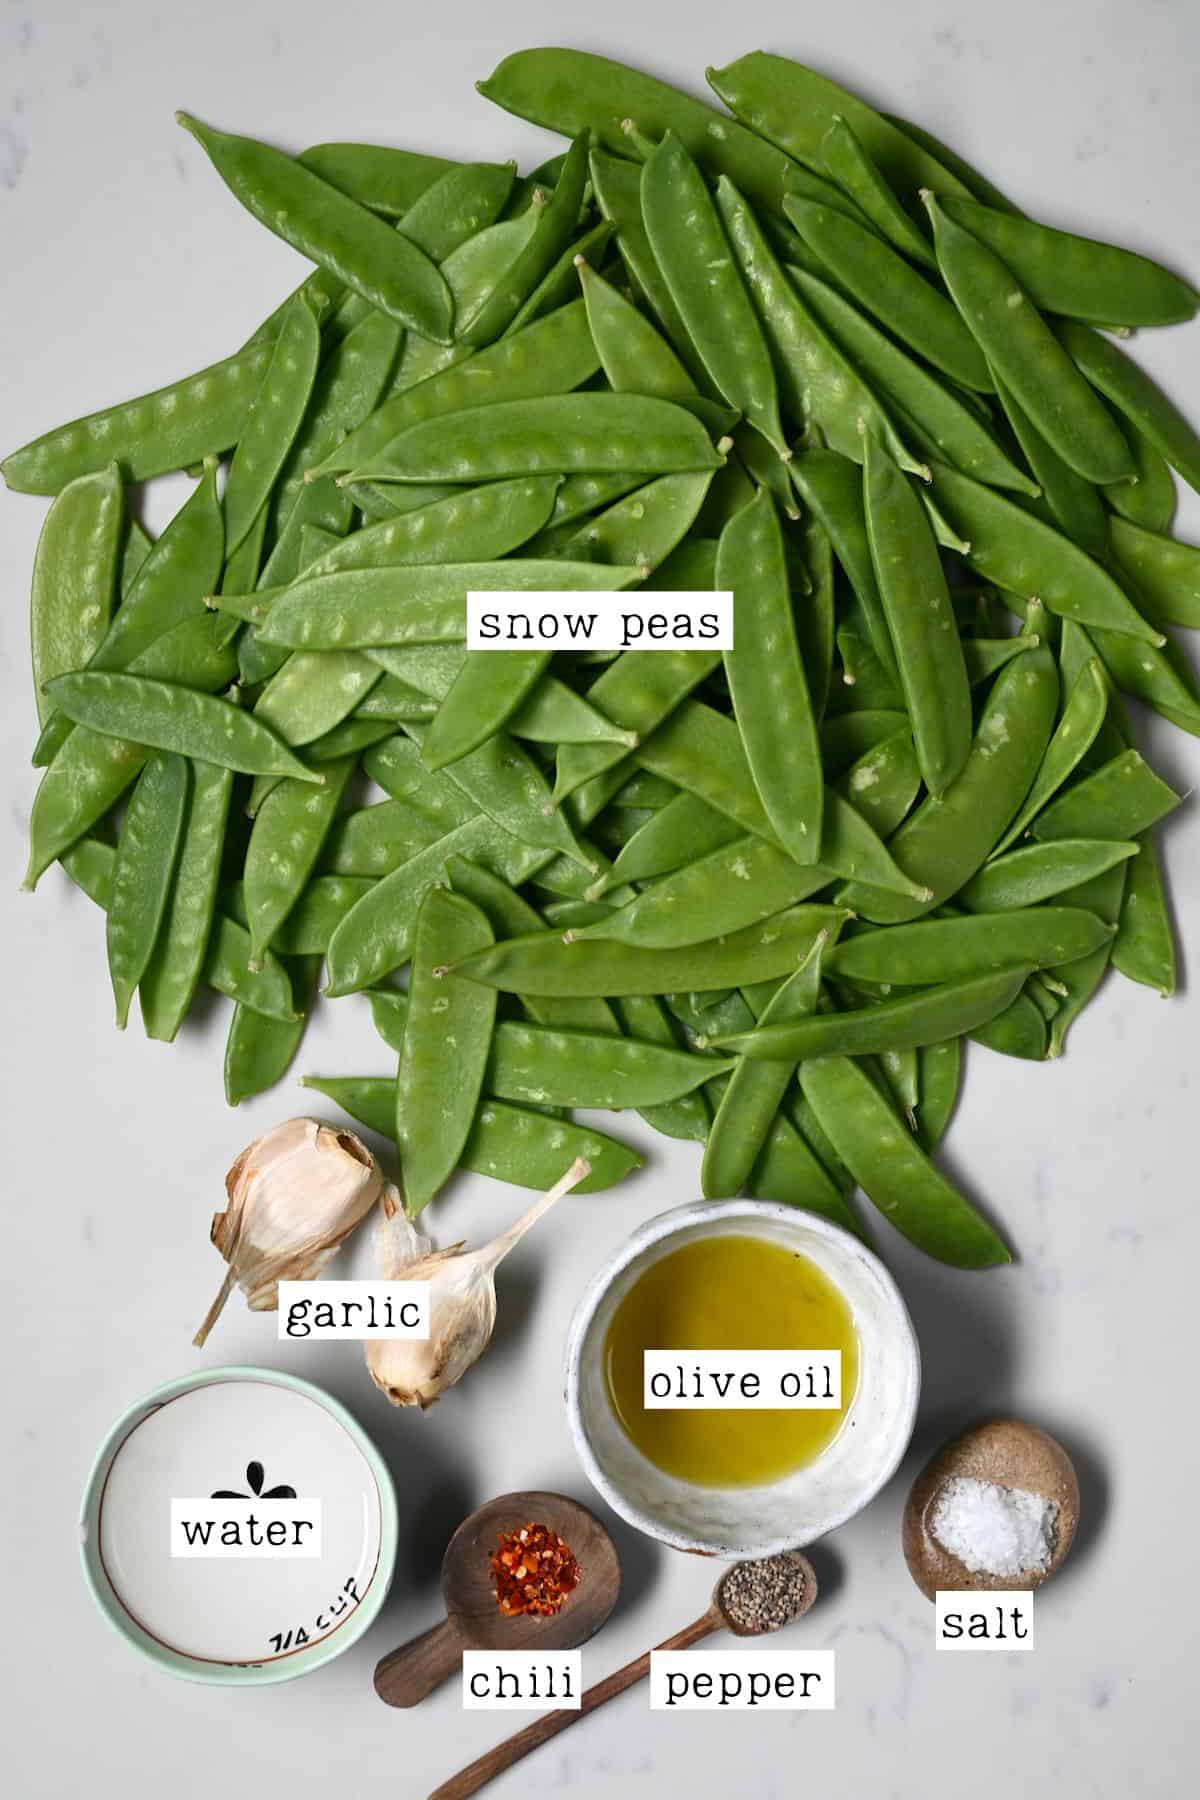 Ingredients for sautéed snow peas